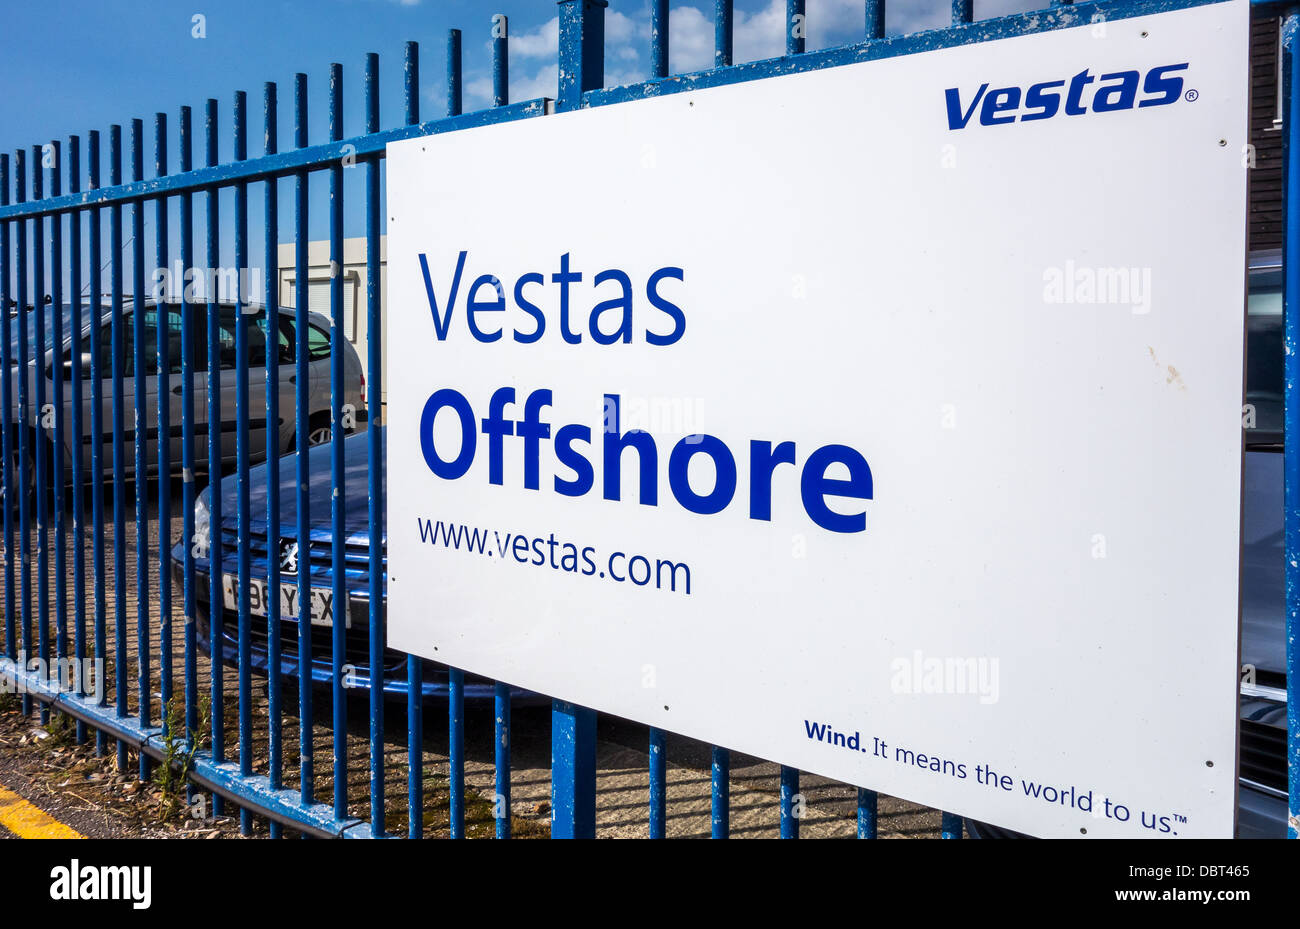 Vestas Offshore Wind Farm Service Stock Photo